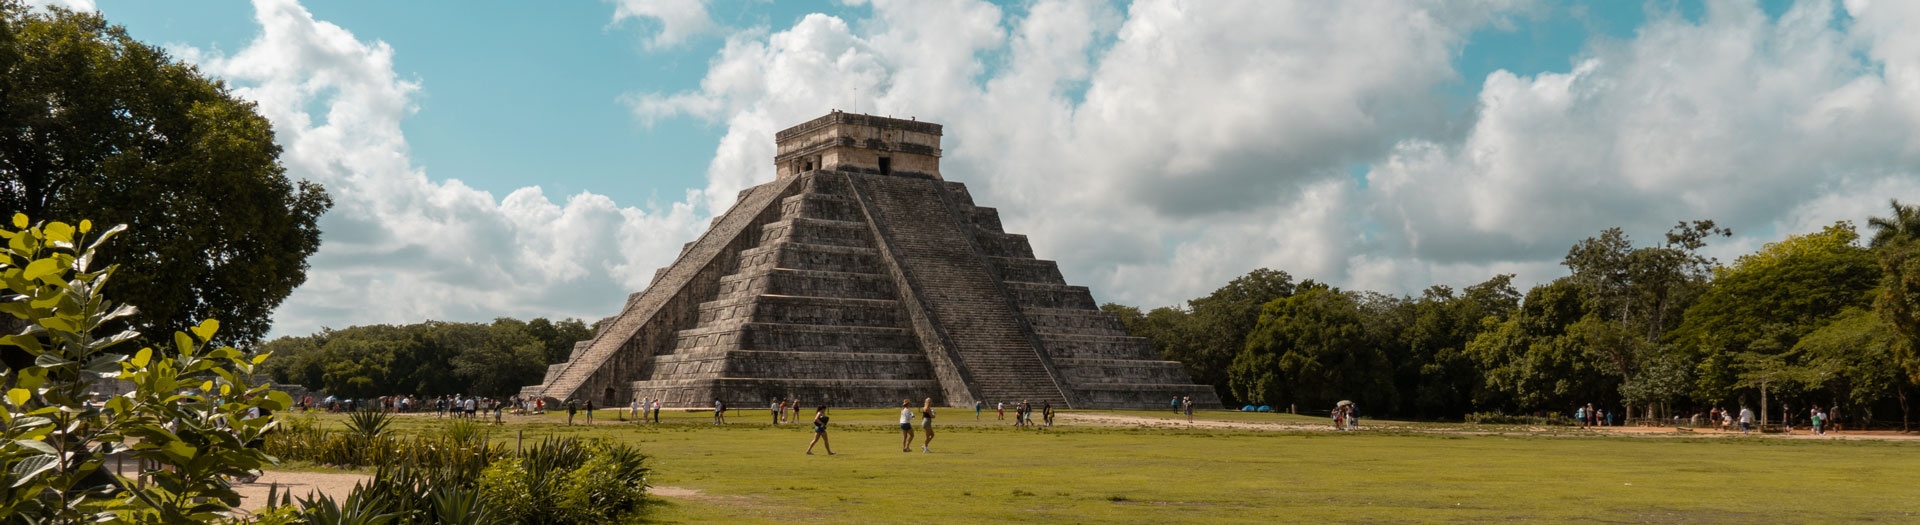 Plongée dans la culture Maya